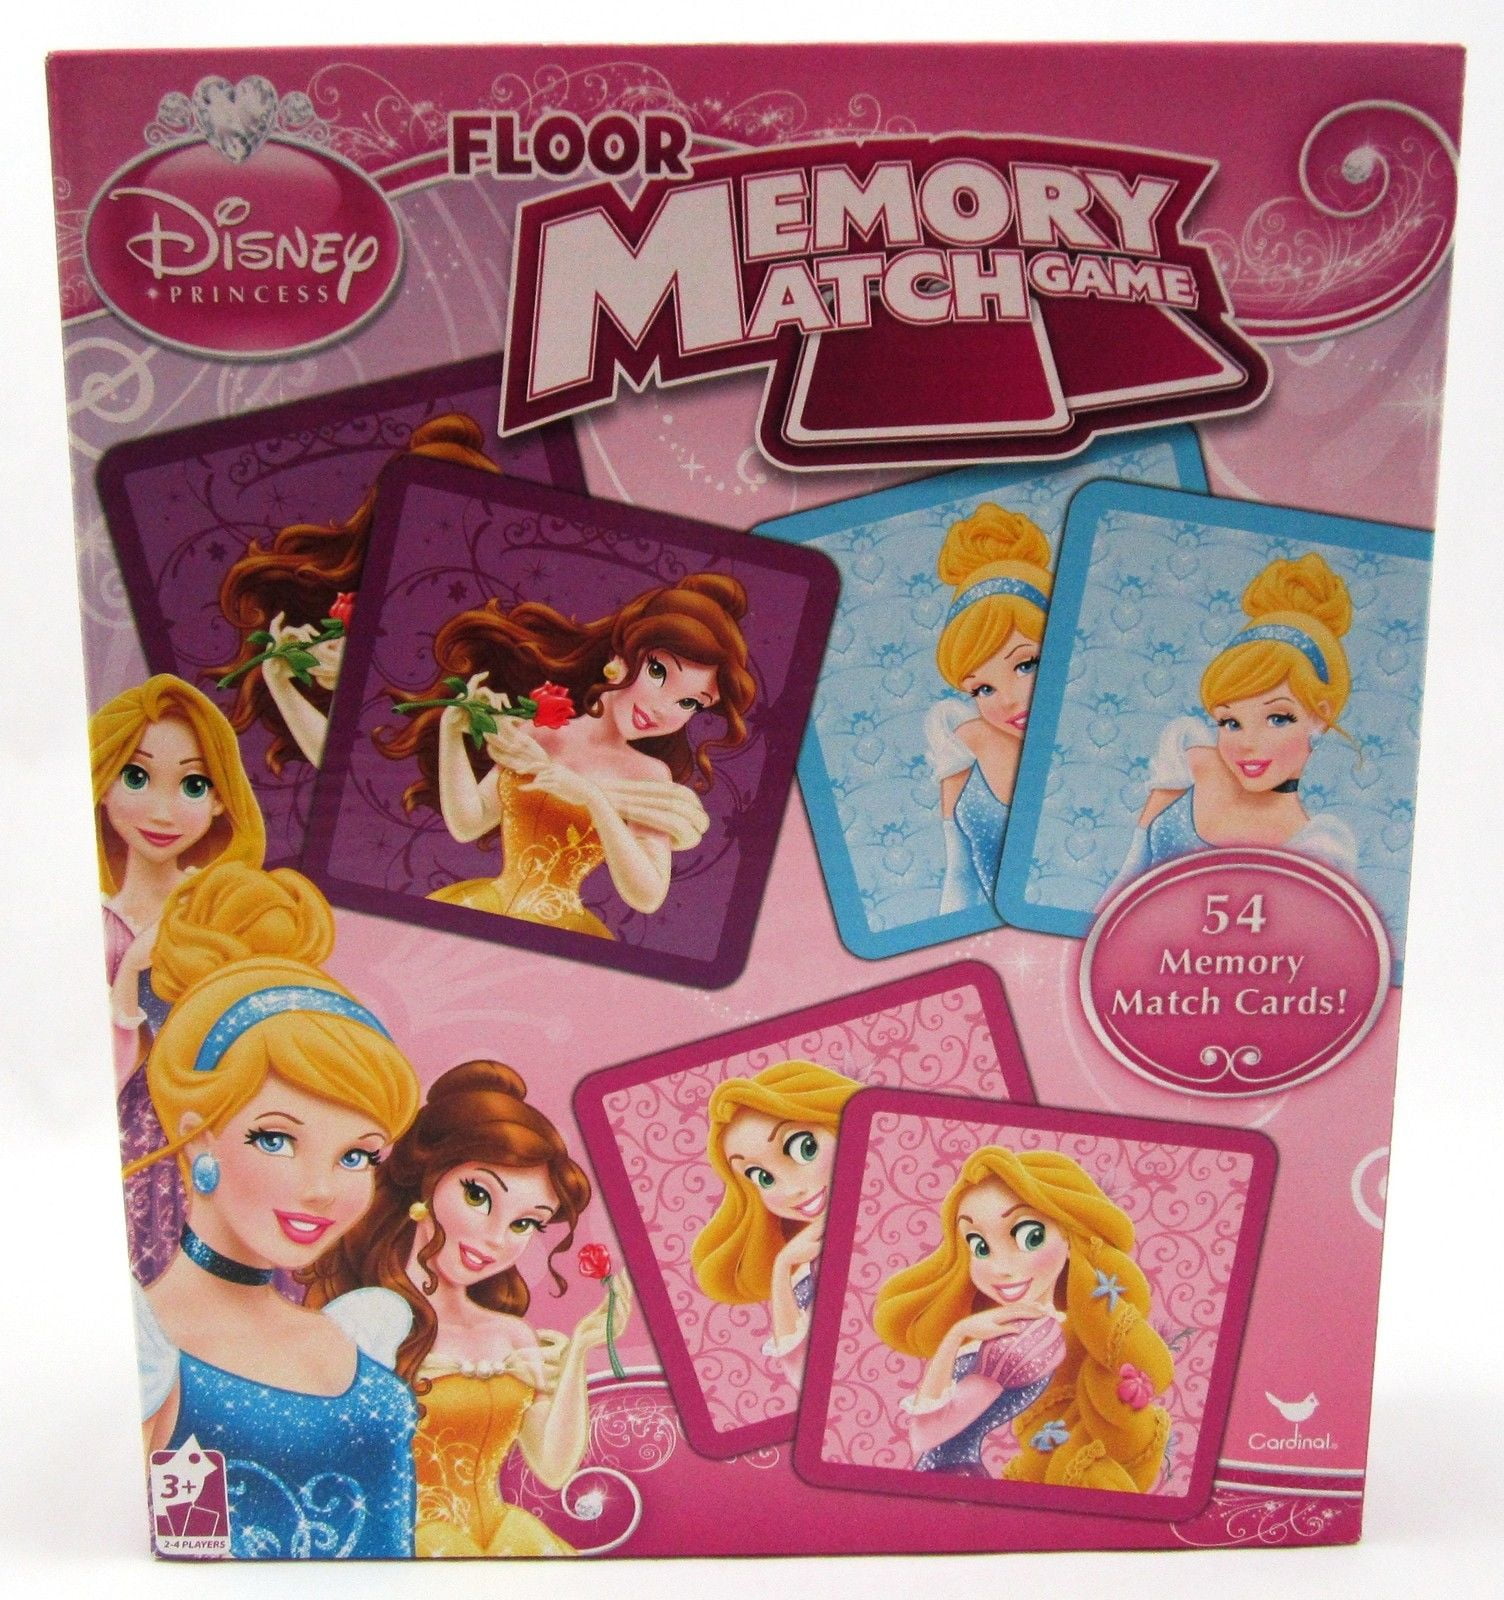 Disney Princess Floor Memory Match Game